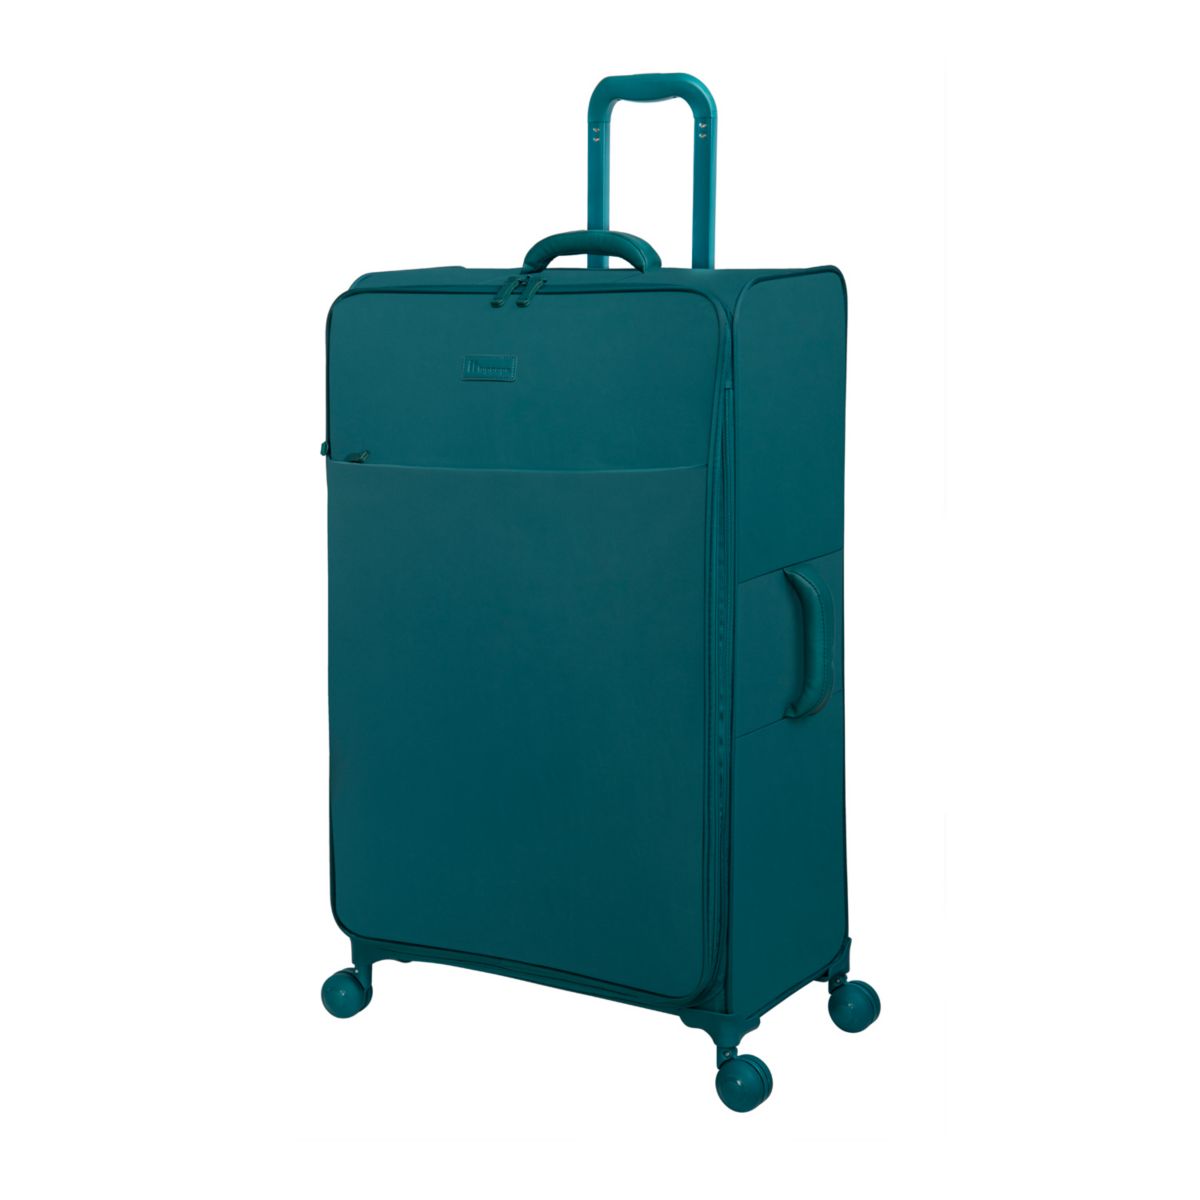 It багаж Lustrous Softside Spinner Luggage It luggage